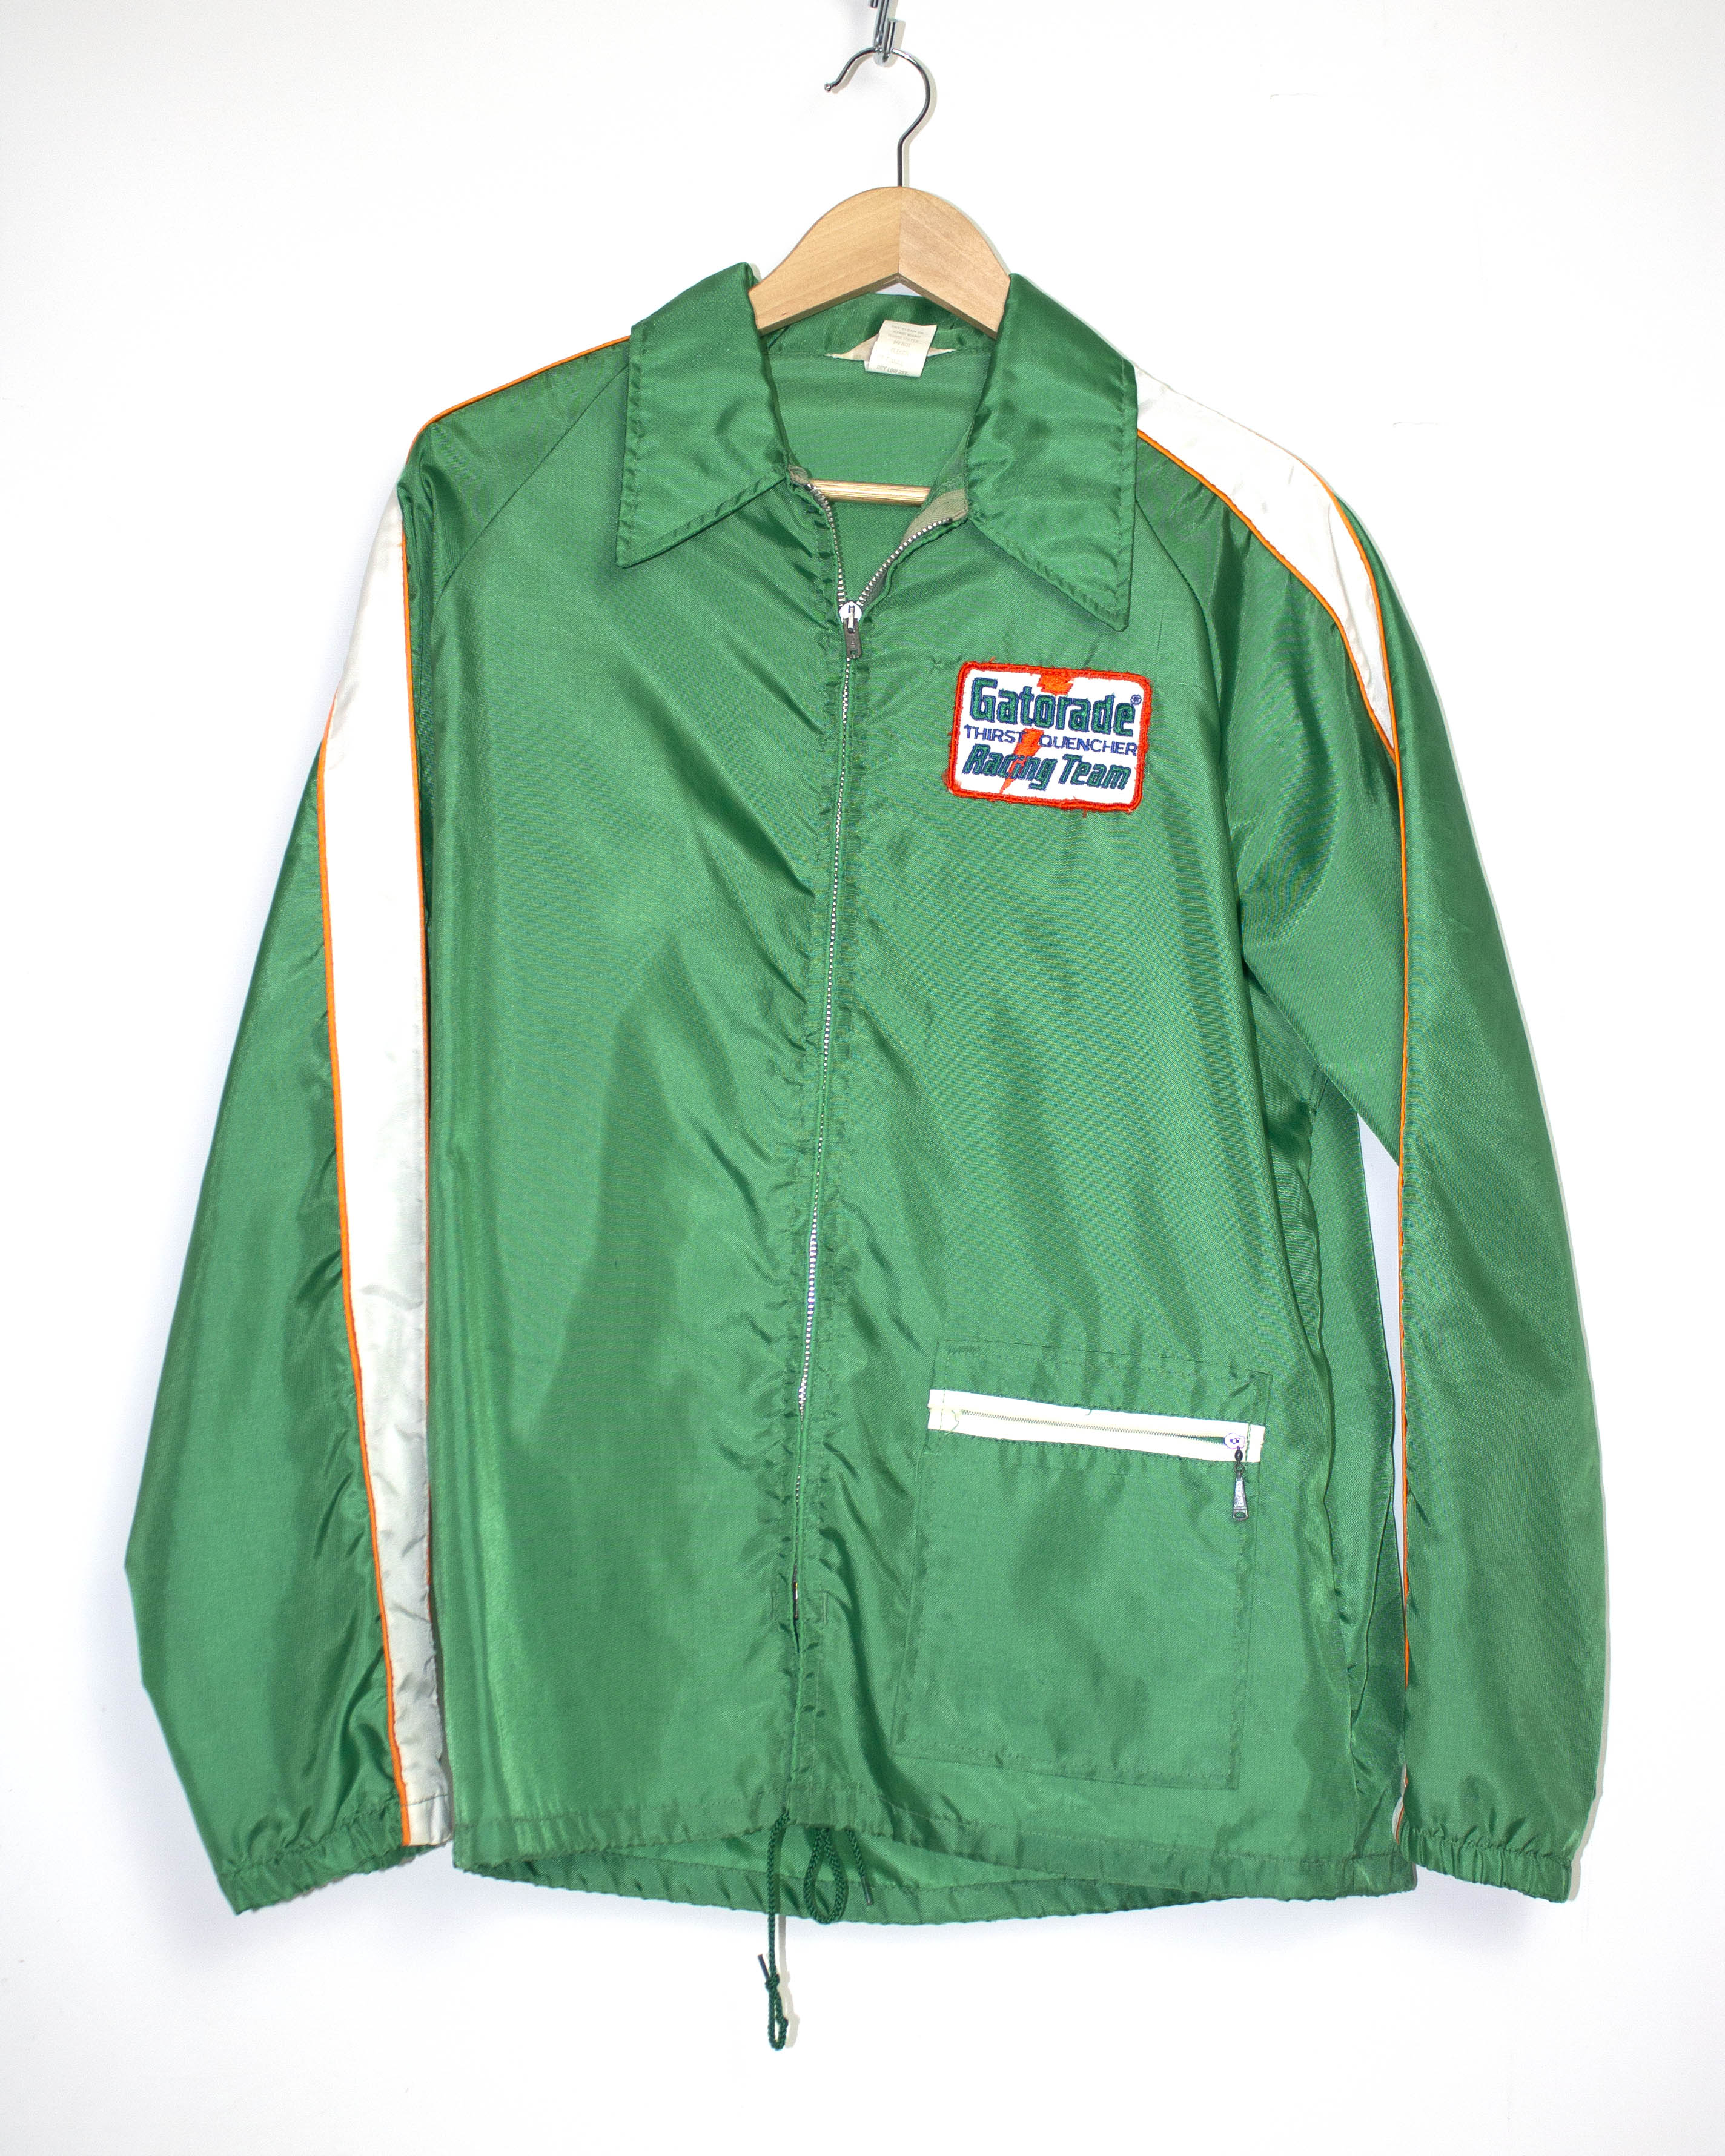 Vintage Gatorade Racing Team Jacket Sz M